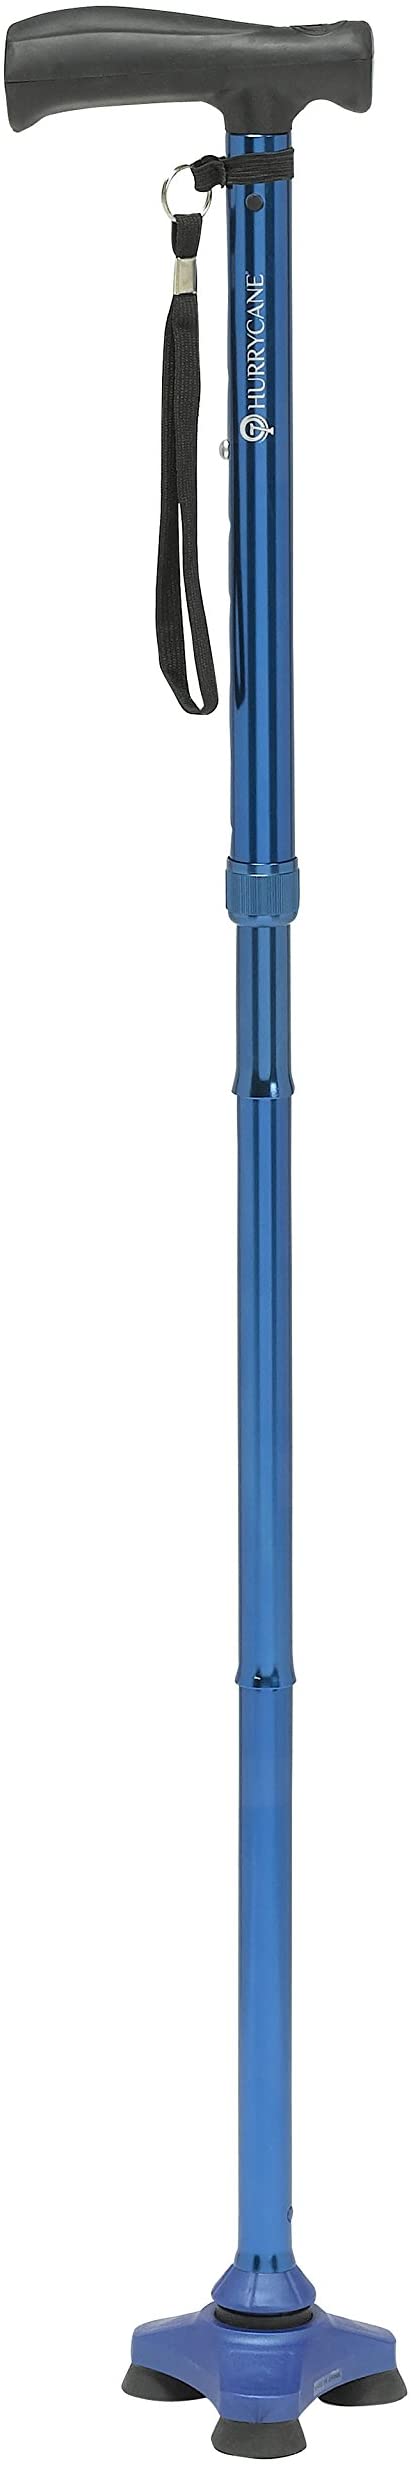 HurryCane Freedom Edition Folding Cane with T Handle, Trailblazer Blue